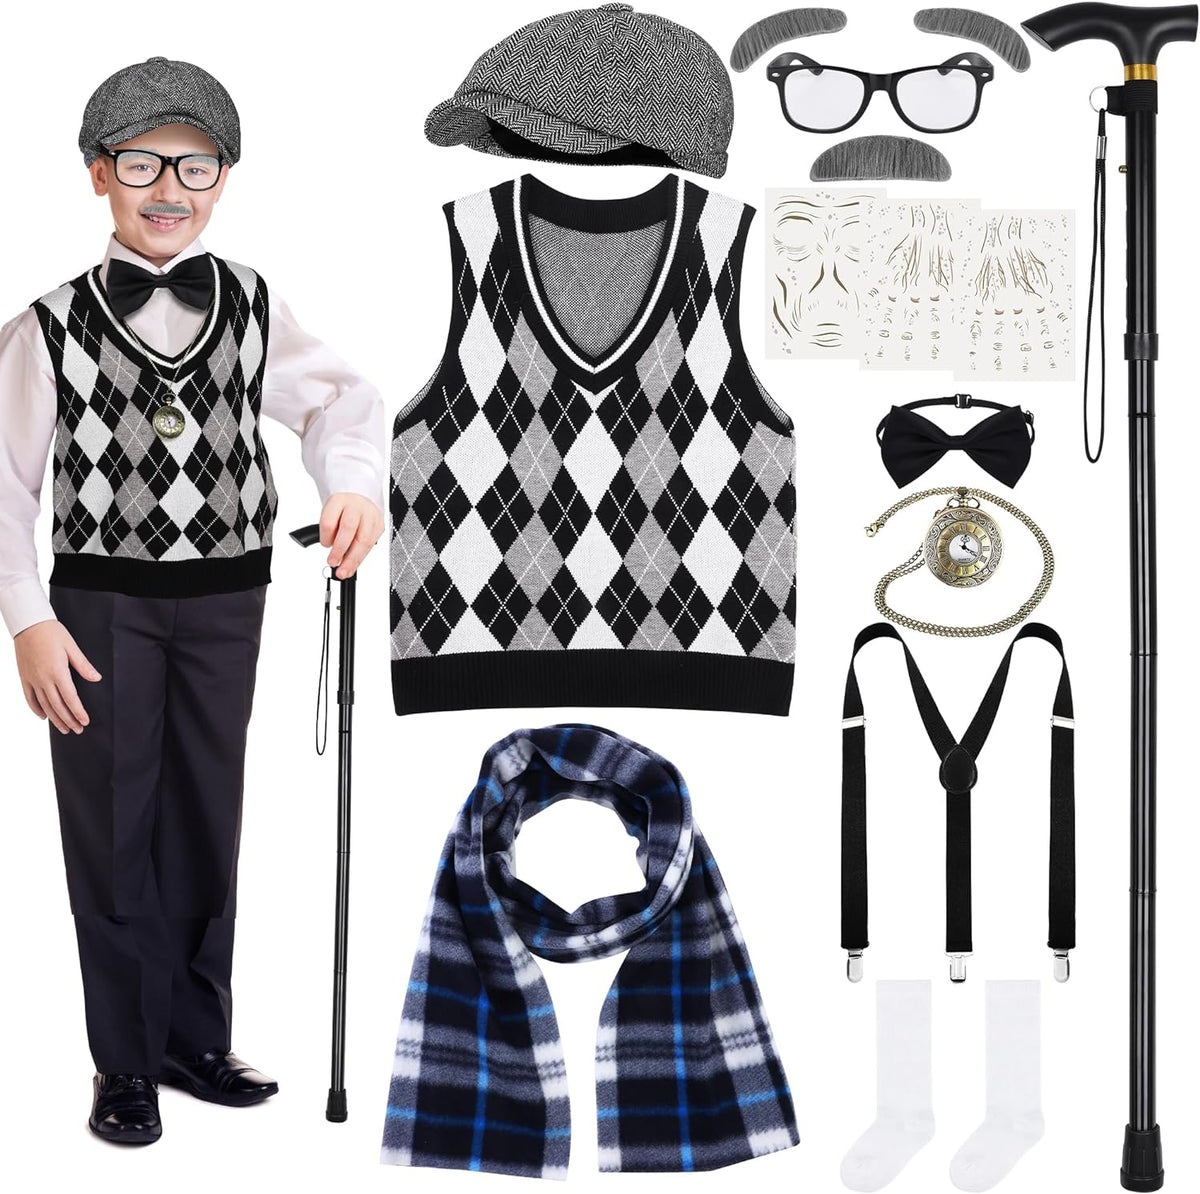 15 Pcs Kids 100 Days of School Costume for Boys Pretend to be Grandpa Costume Old Man Accessories Cykapu